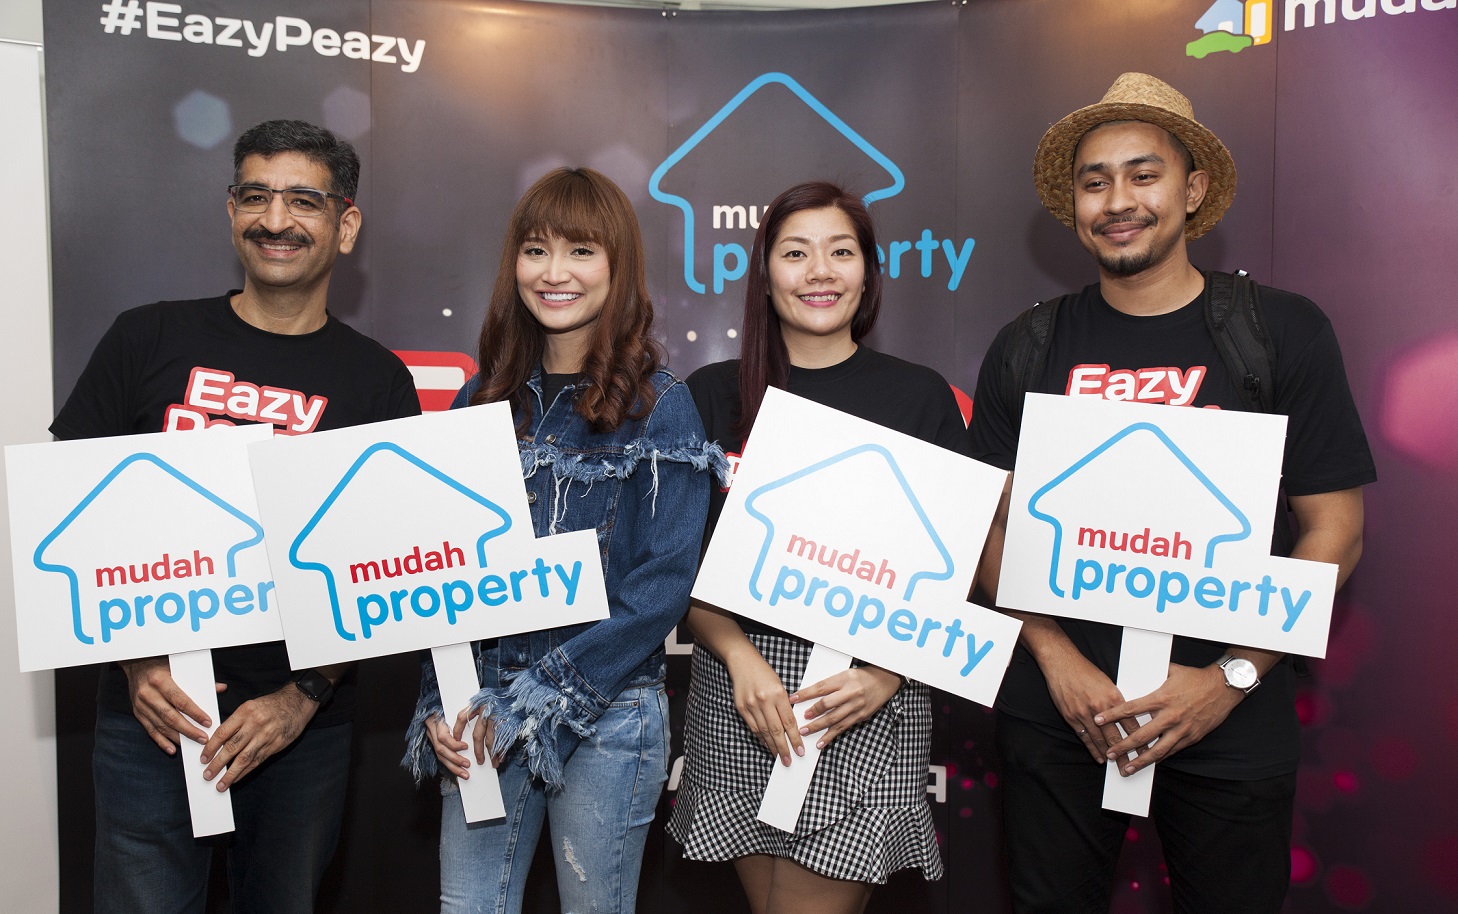 Mudah Property aims for number one property platform spot